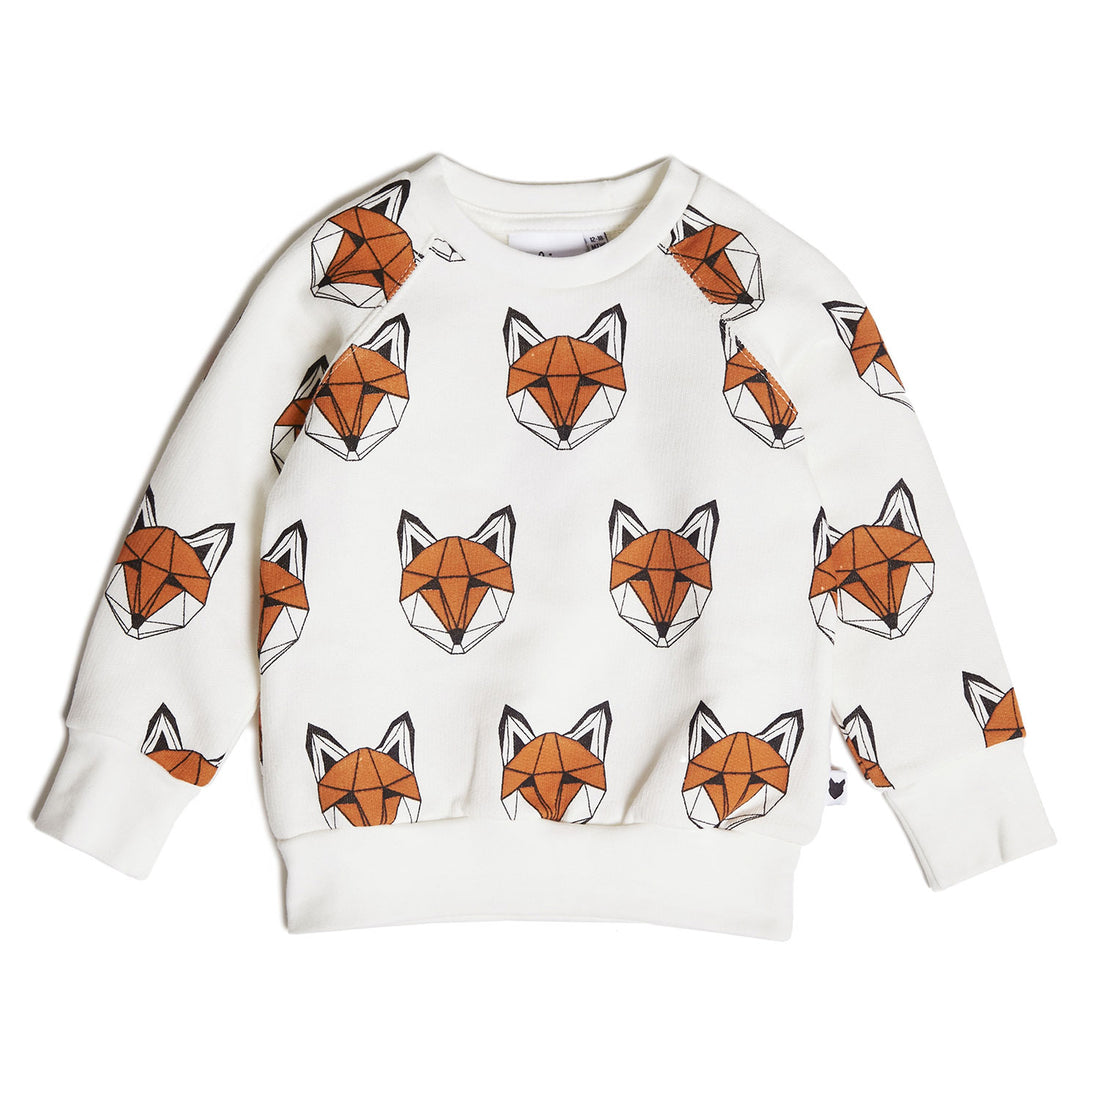 Nenn mich einfach Fox Sweatshirt